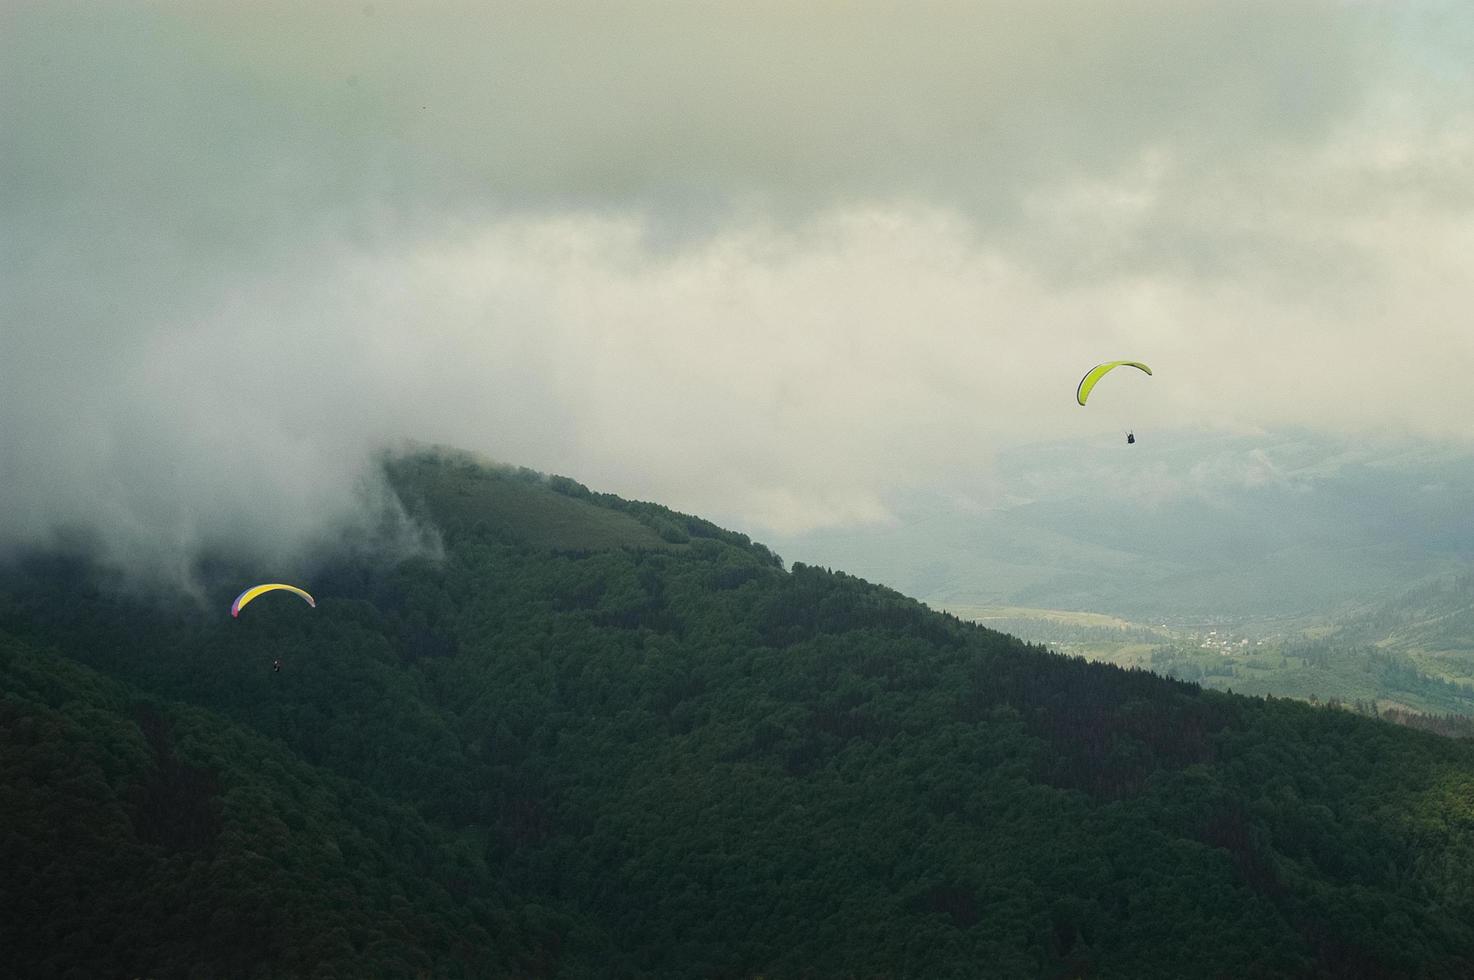 ponticelli paracadutisti in montagne nebbiose nuvolose foto